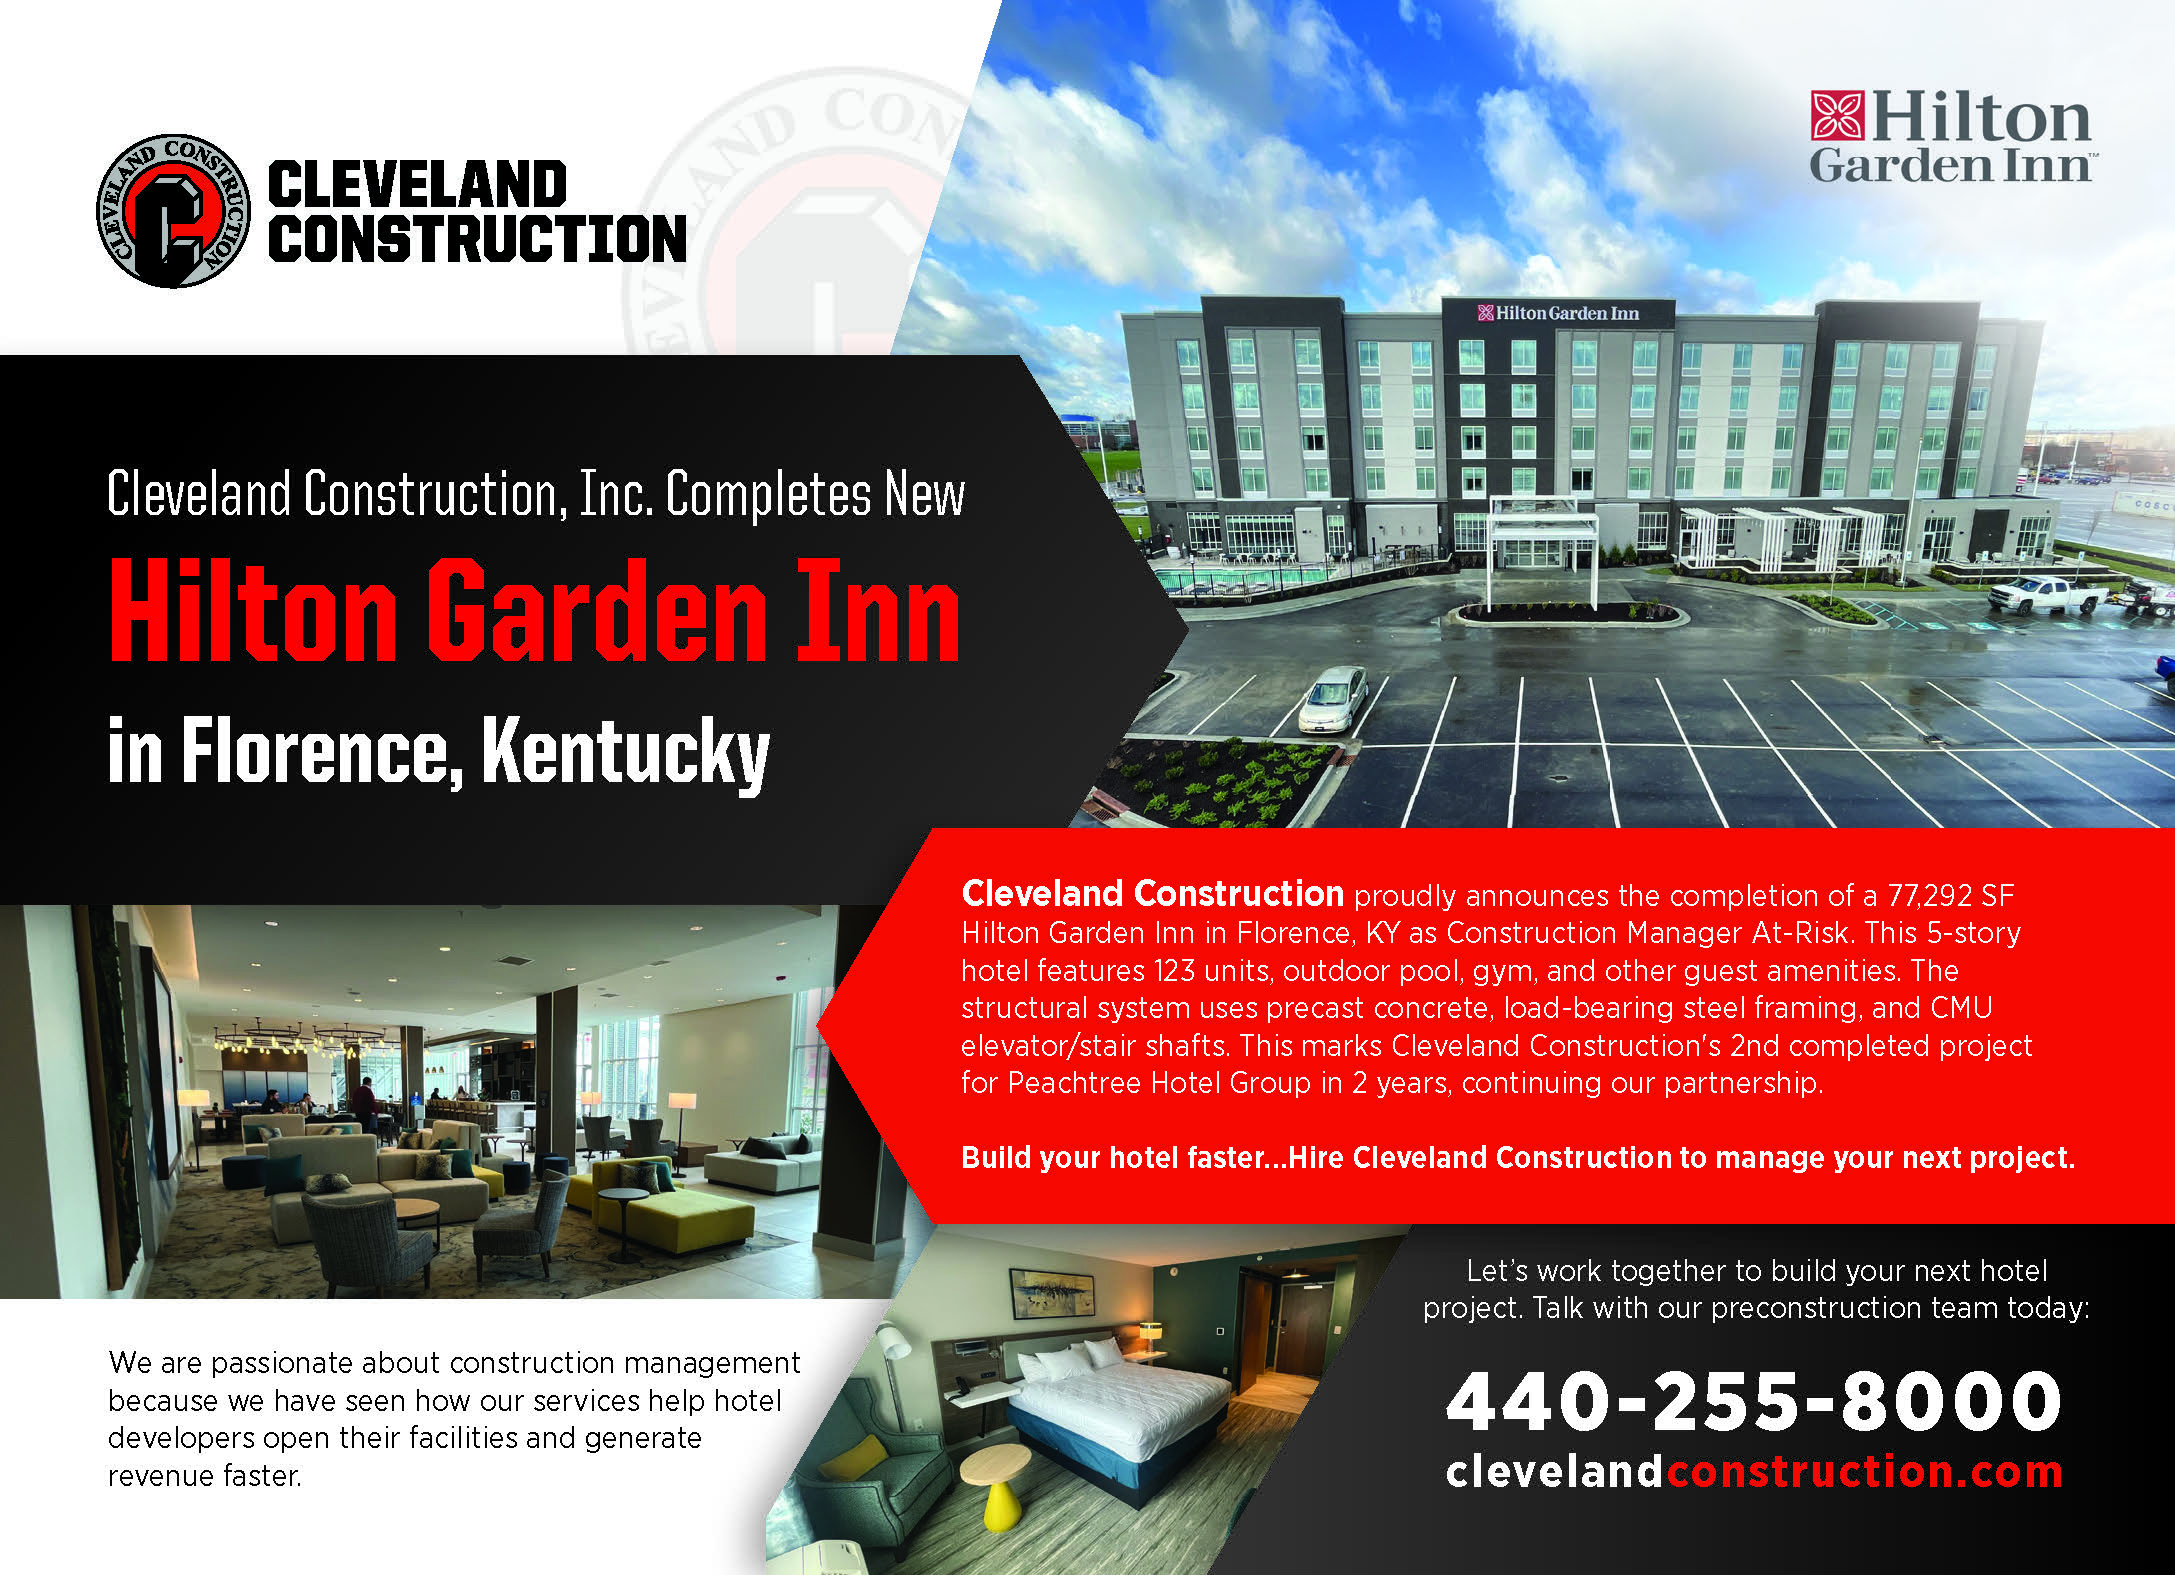 Cleveland Construction Completes Construction of New Hilton Garden Inn in Florence, Kentucky